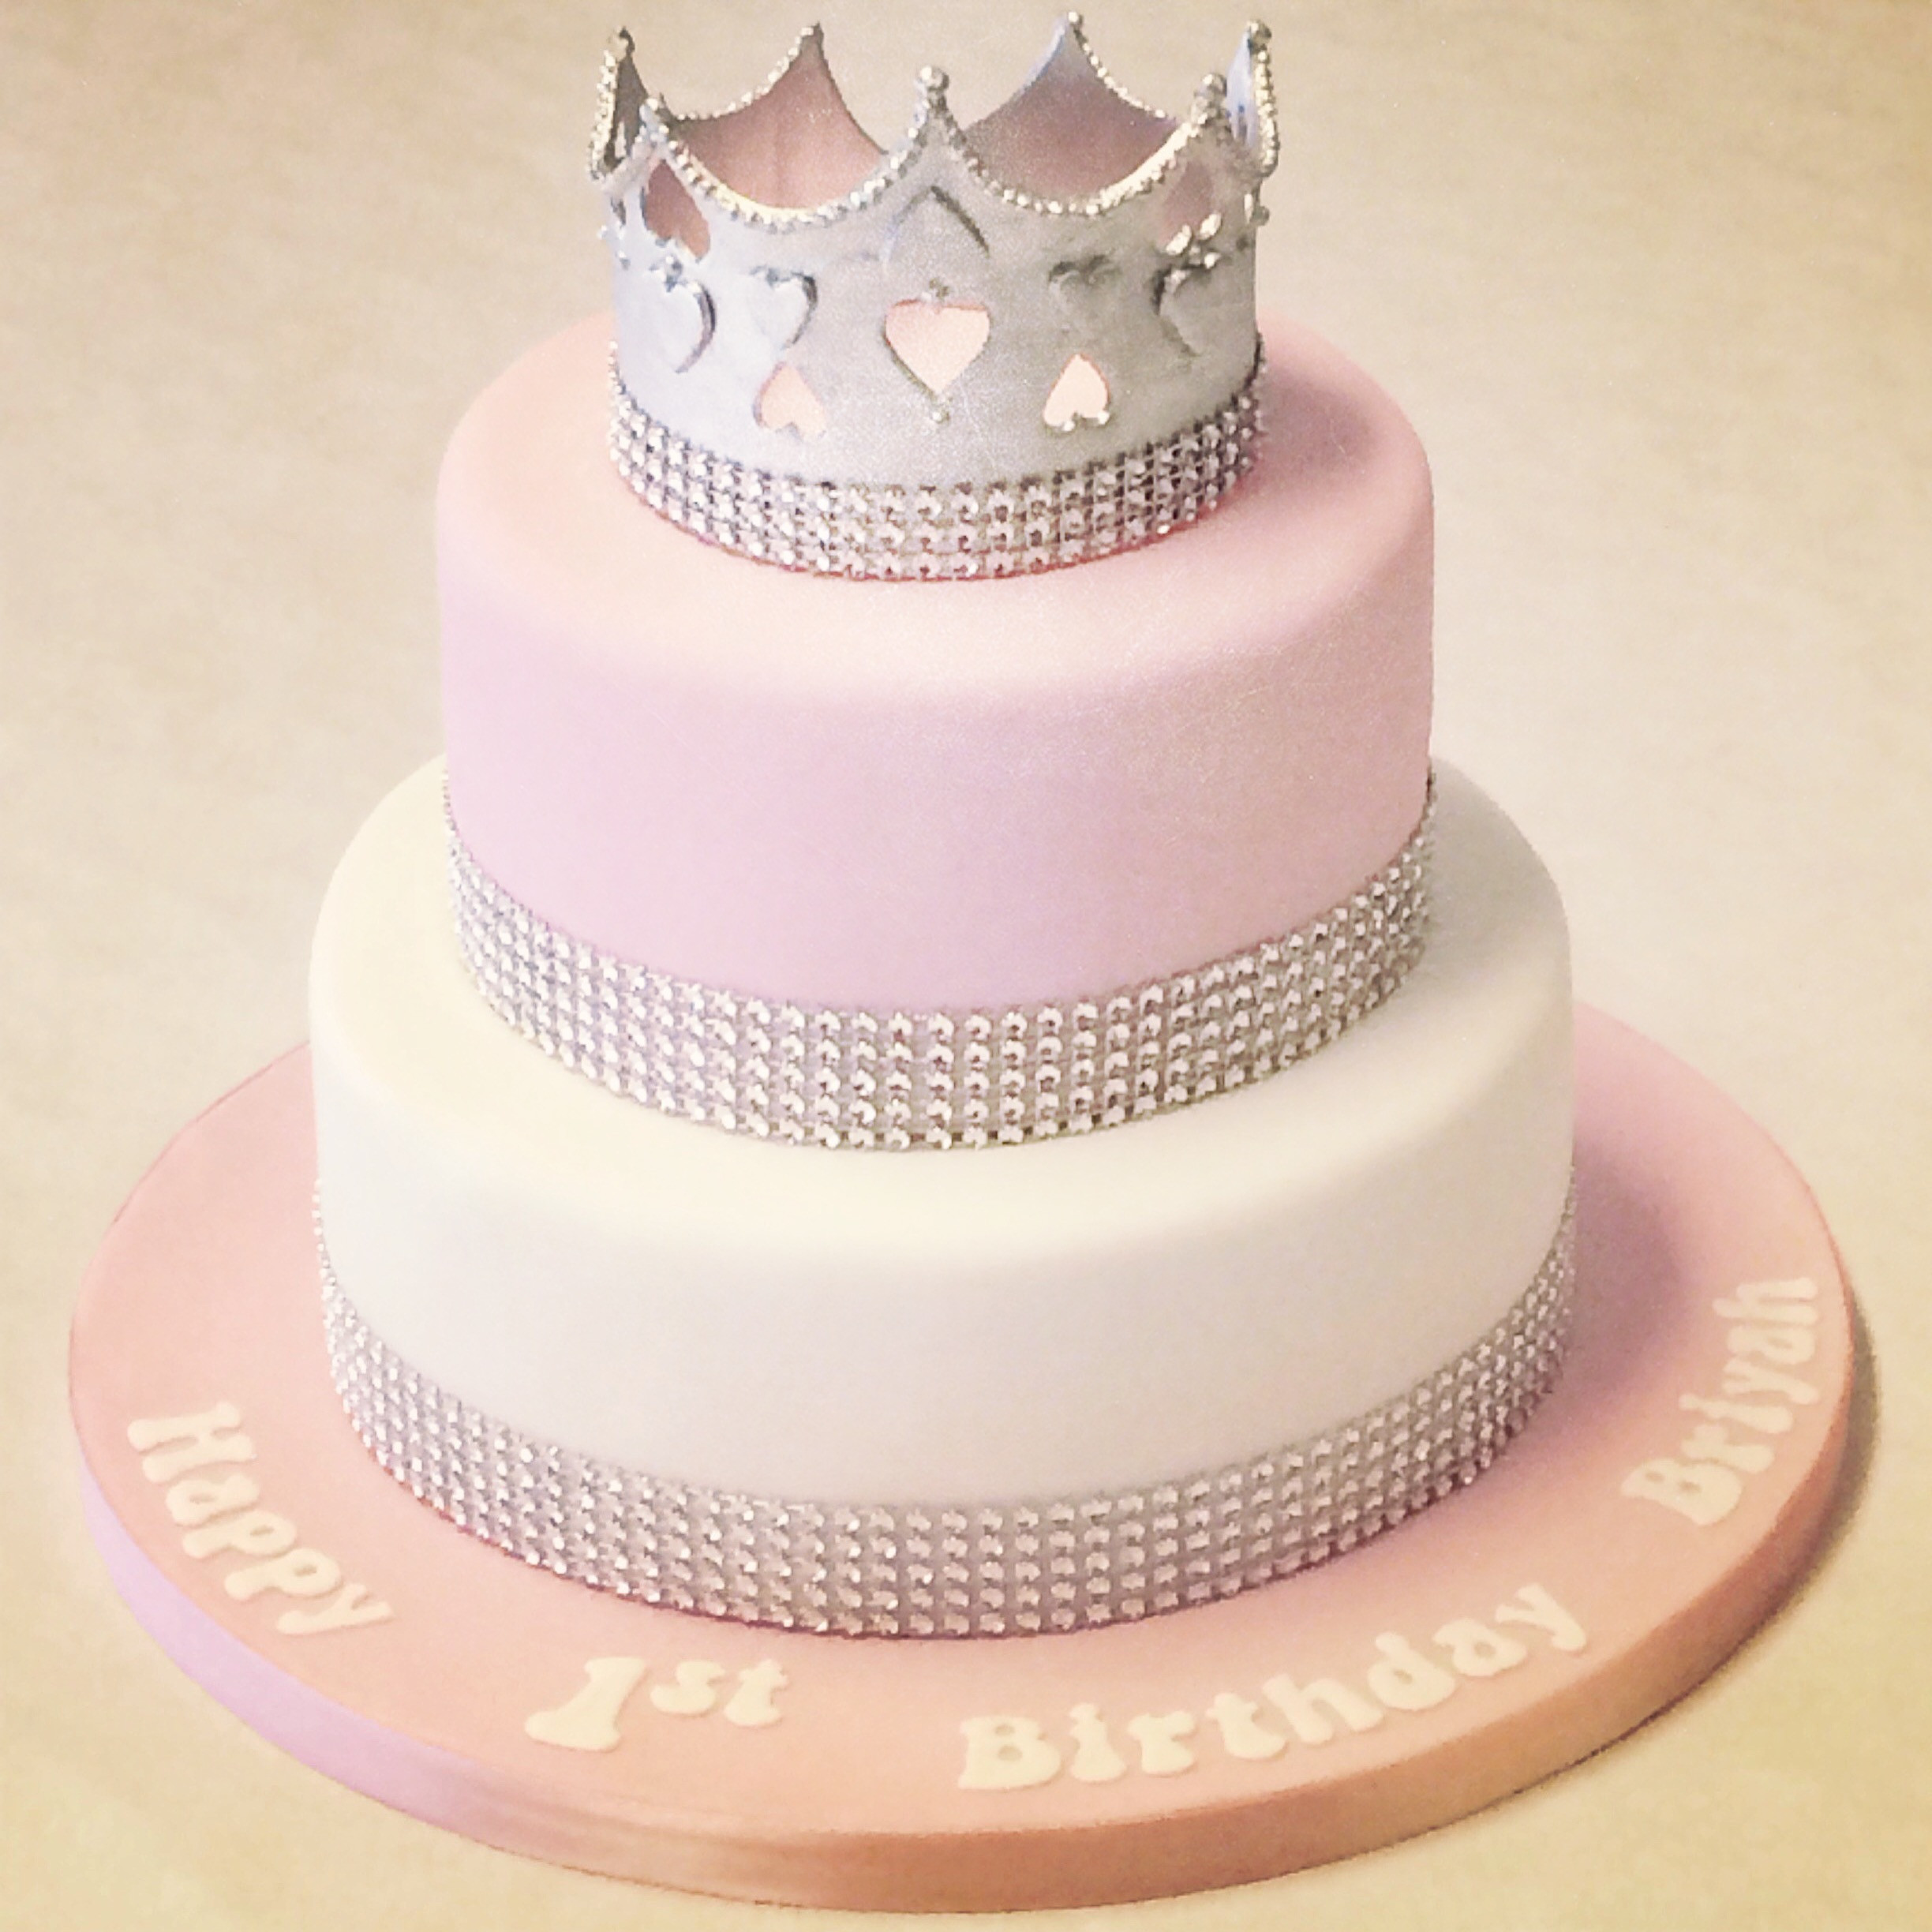 2 Tier Birthday Cakes
 2 Tier Pink and White Princess Cake Children s Birthday